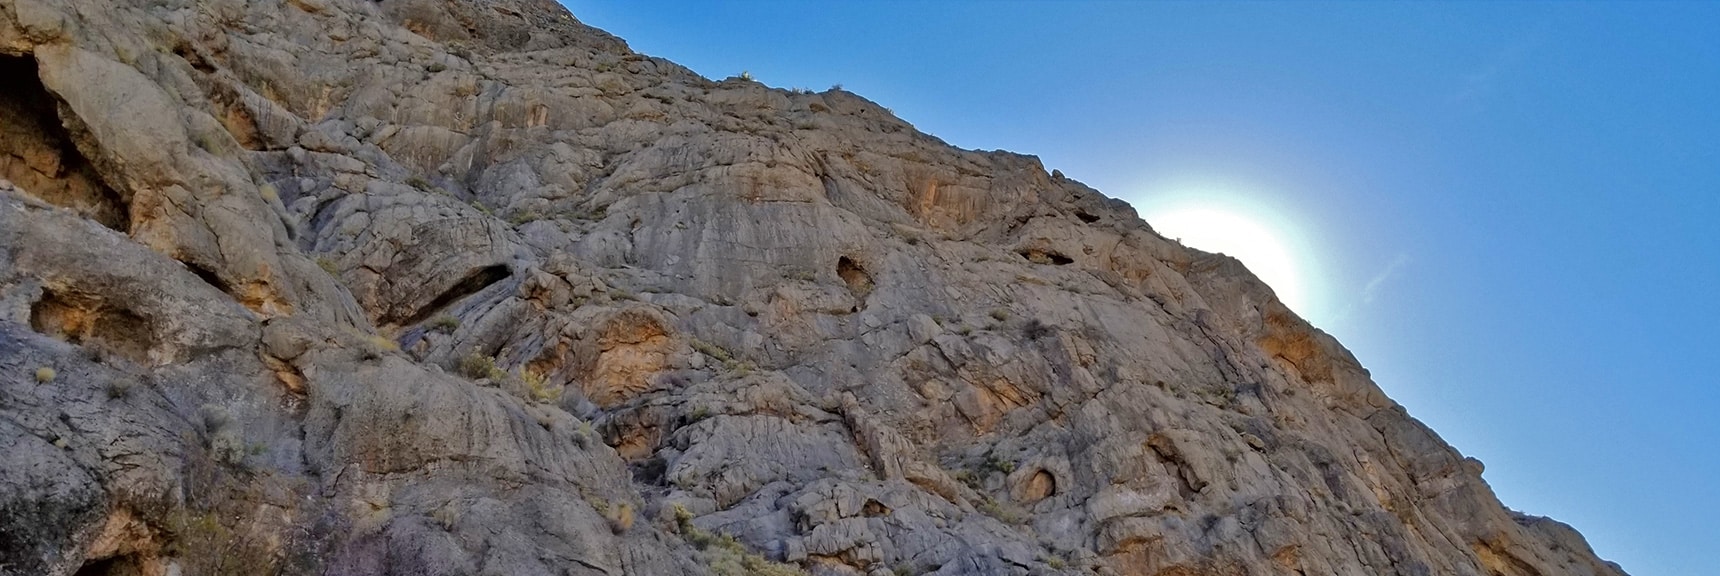 Rugged Cliffs in Pass | Gass Peak Road Circuit | Desert National Wildlife Refuge | Nevada